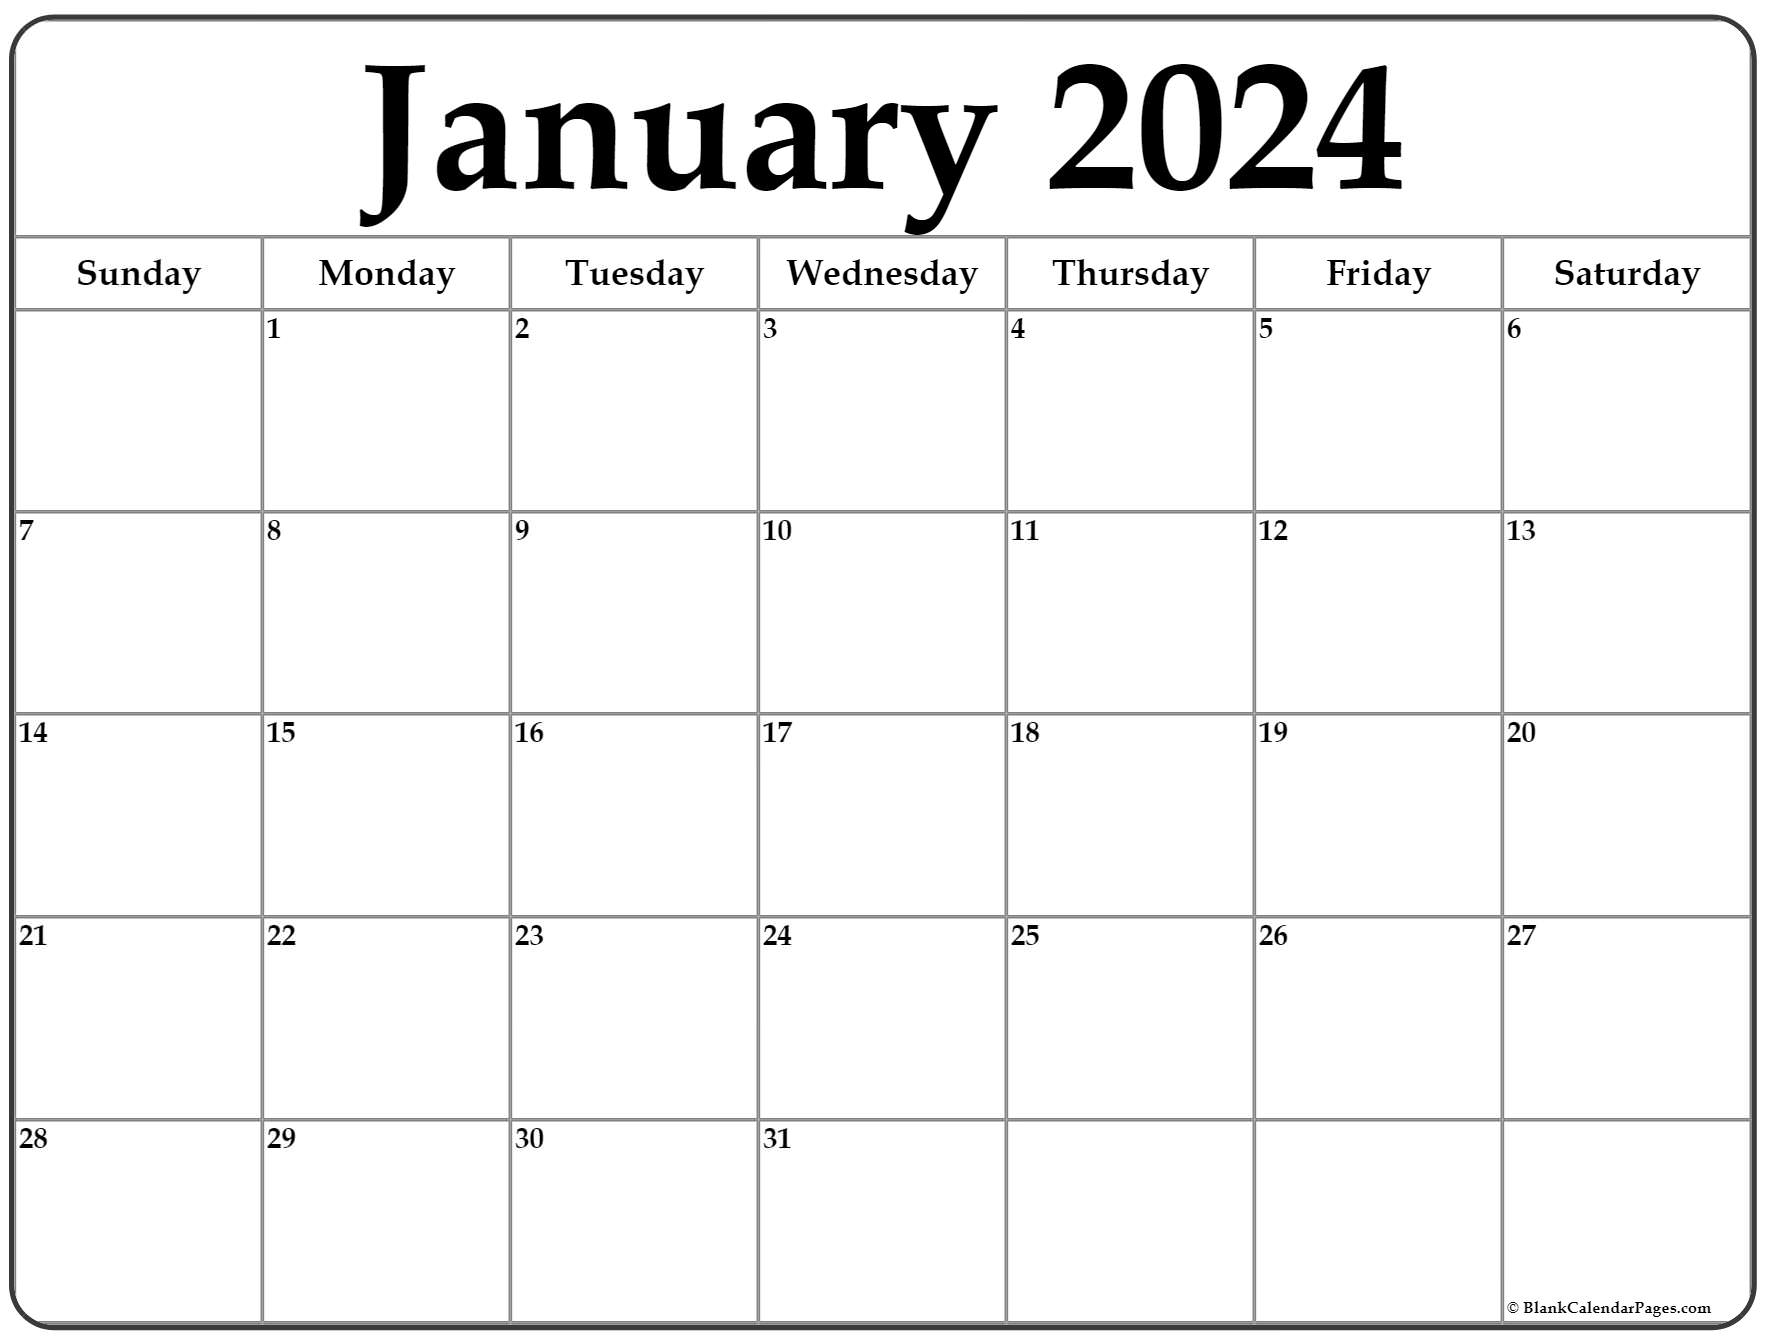 January 2024 Calendar | Free Printable Calendar for 2024 Month Calendar Printable